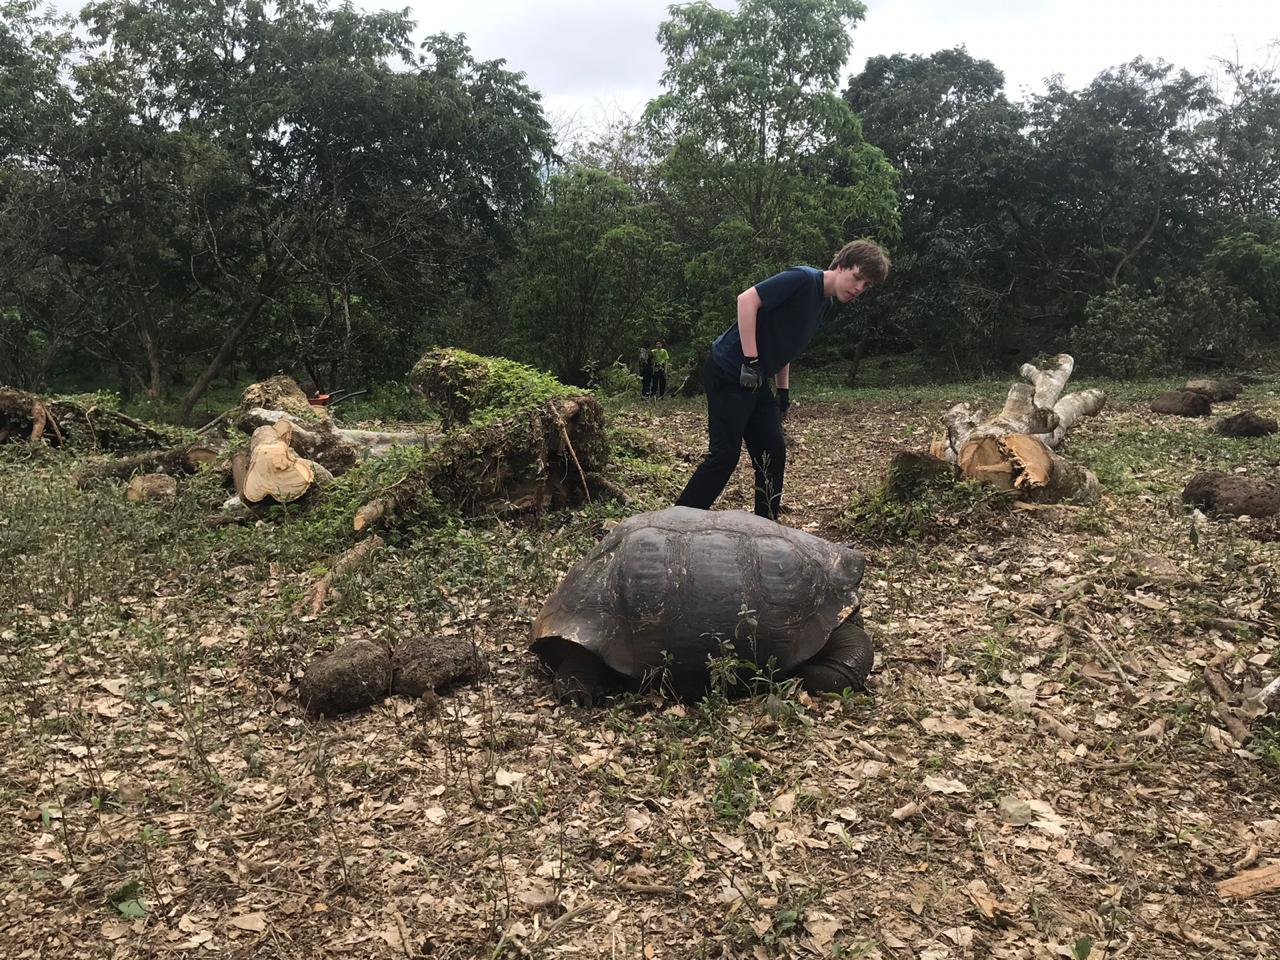 working around a giant tortoise